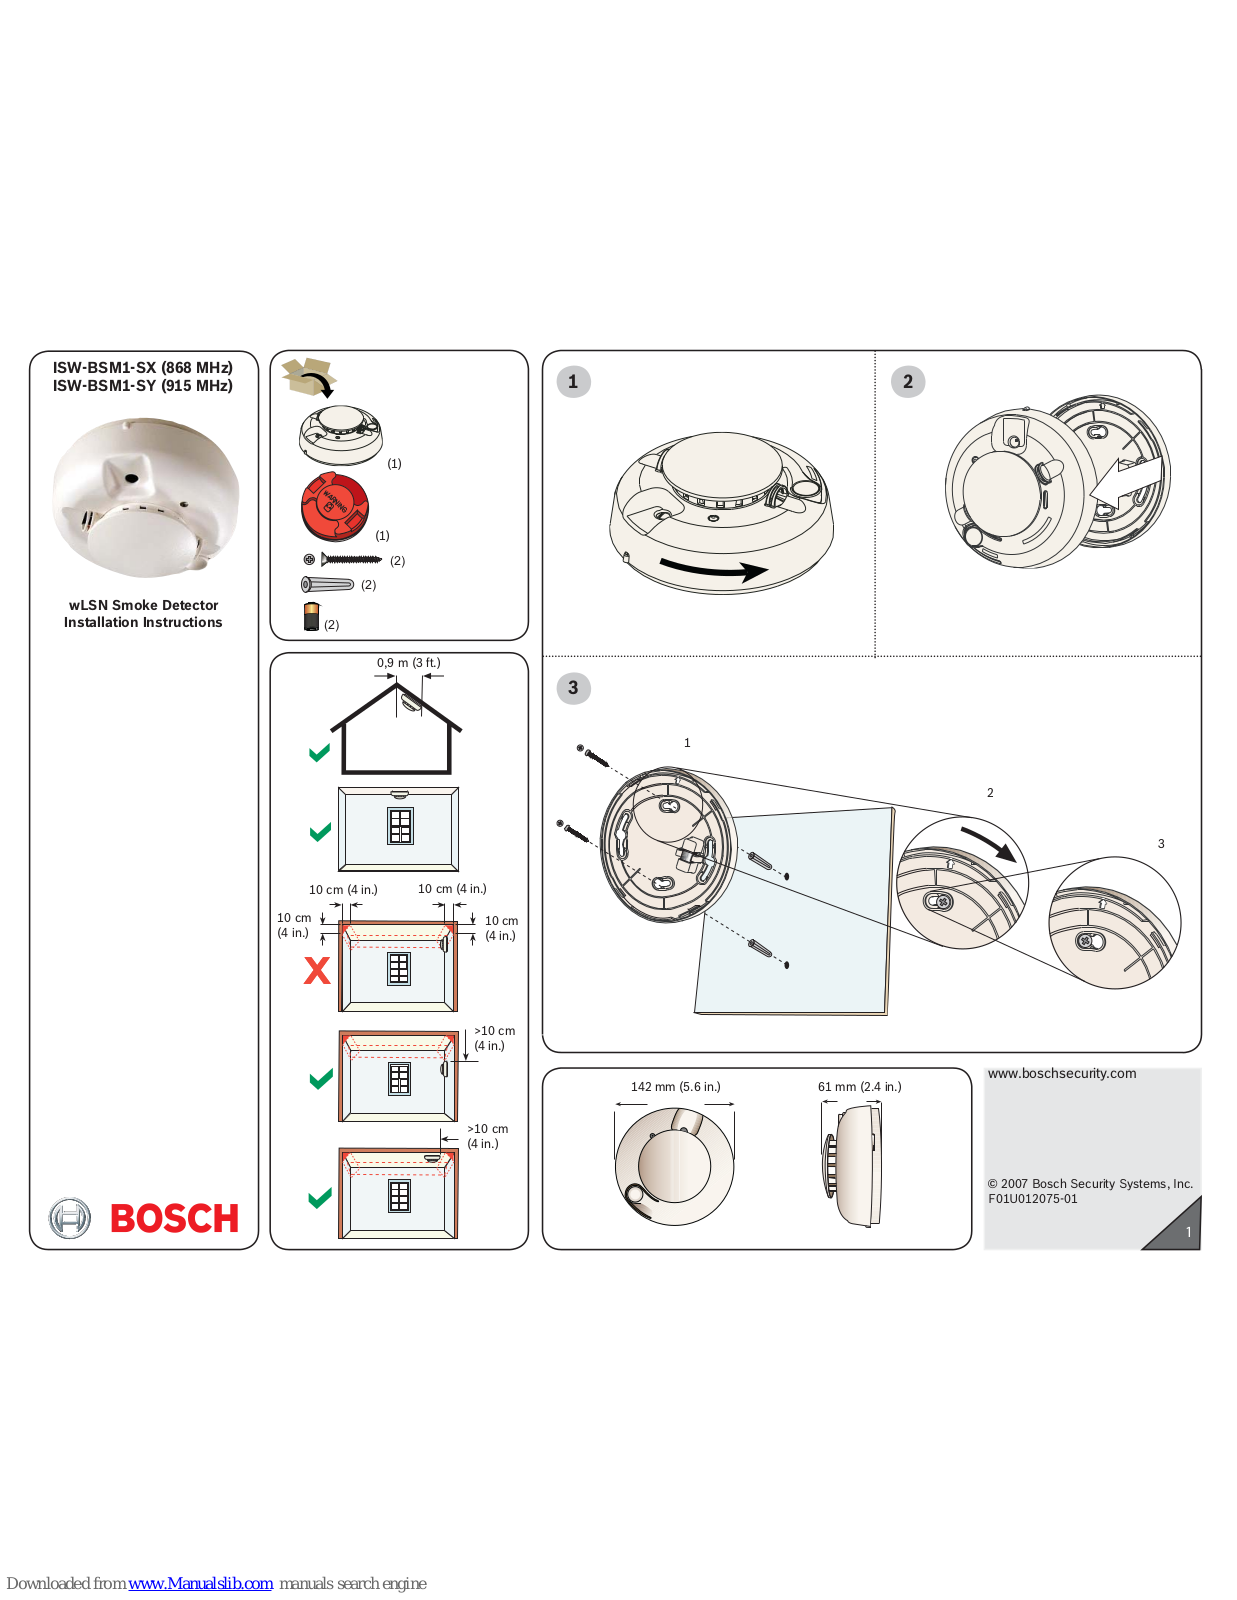 Bosch ISW-BSM1-SX, ISW-BSM1-SY Installation Instructions Manual